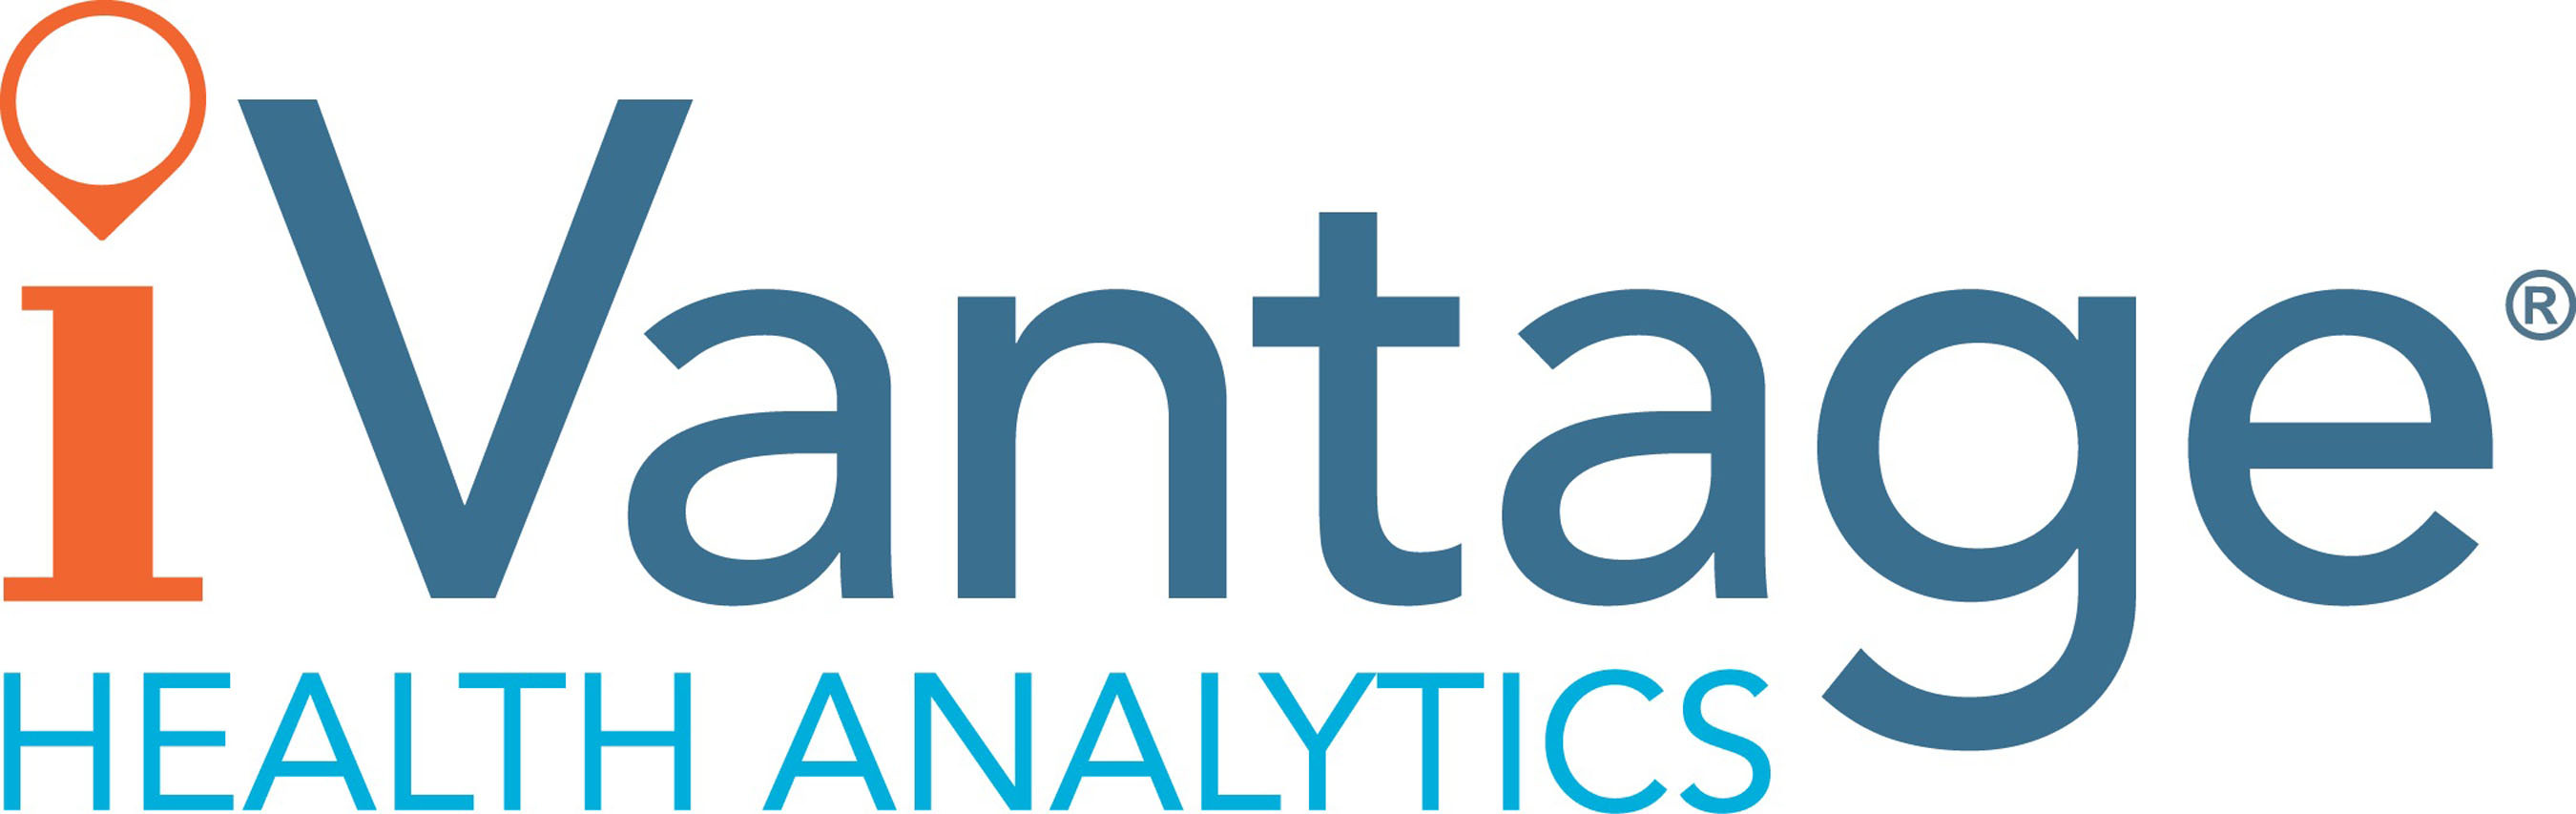 iVantage Health Analytics. (PRNewsFoto/iVantage Health Analytics, Inc.) (PRNewsFoto/IVANTAGE HEALTH ANALYTICS, INC.)